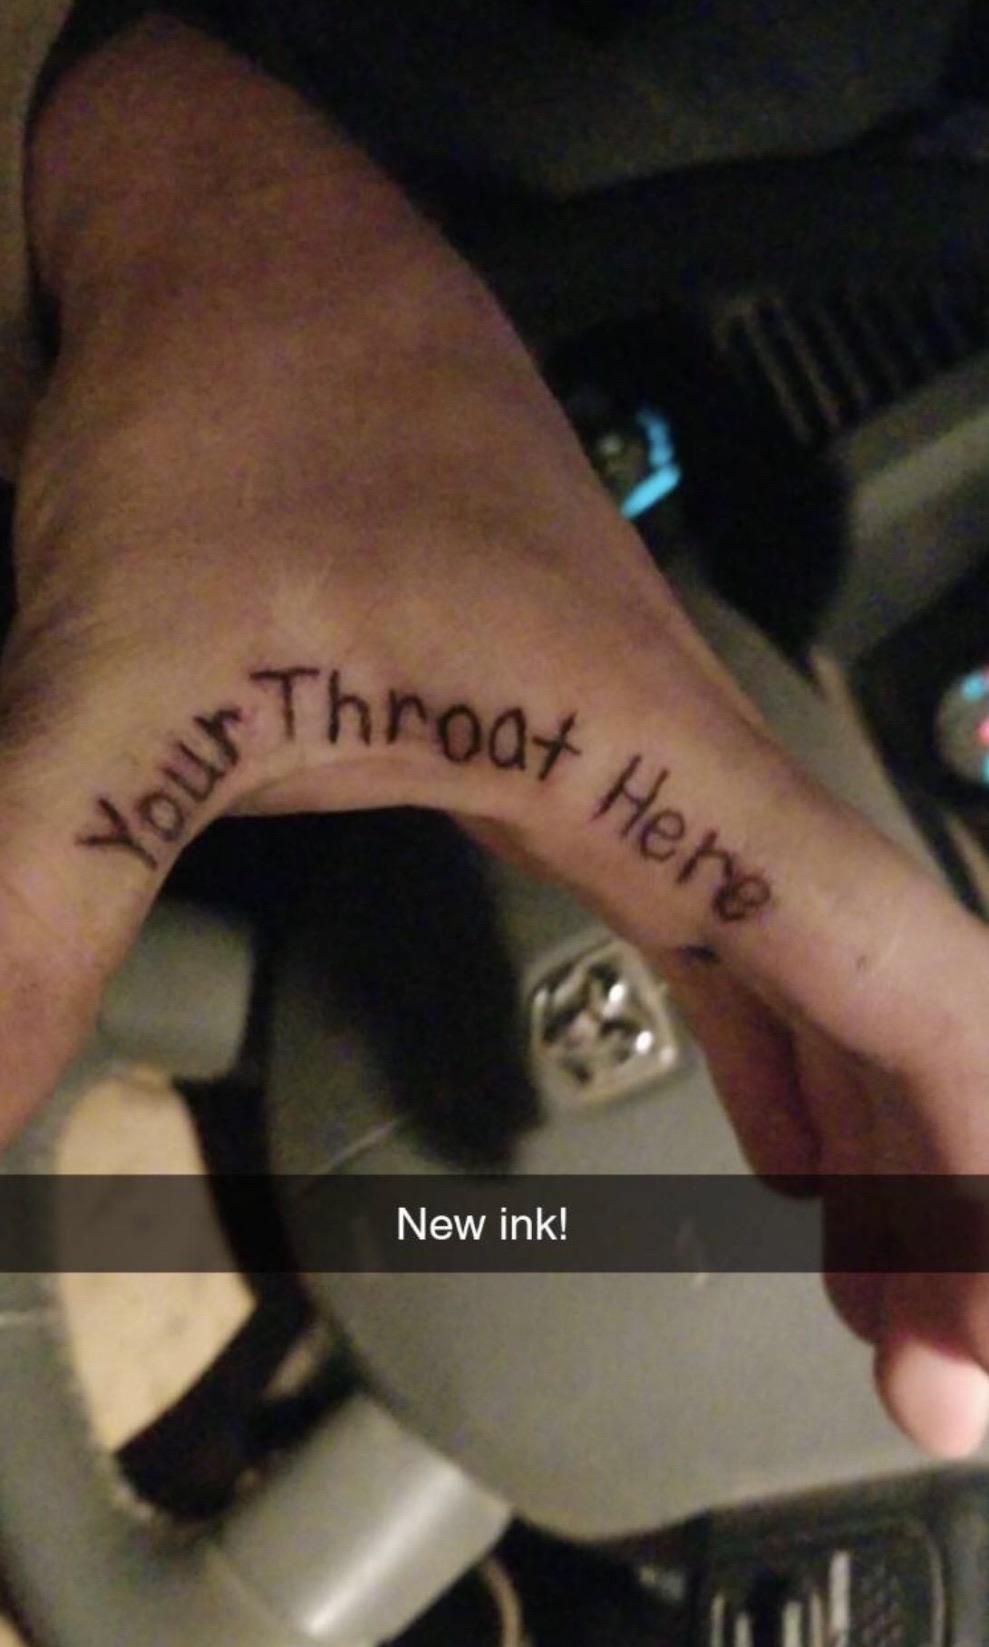 nail - Throat H at Here New ink!